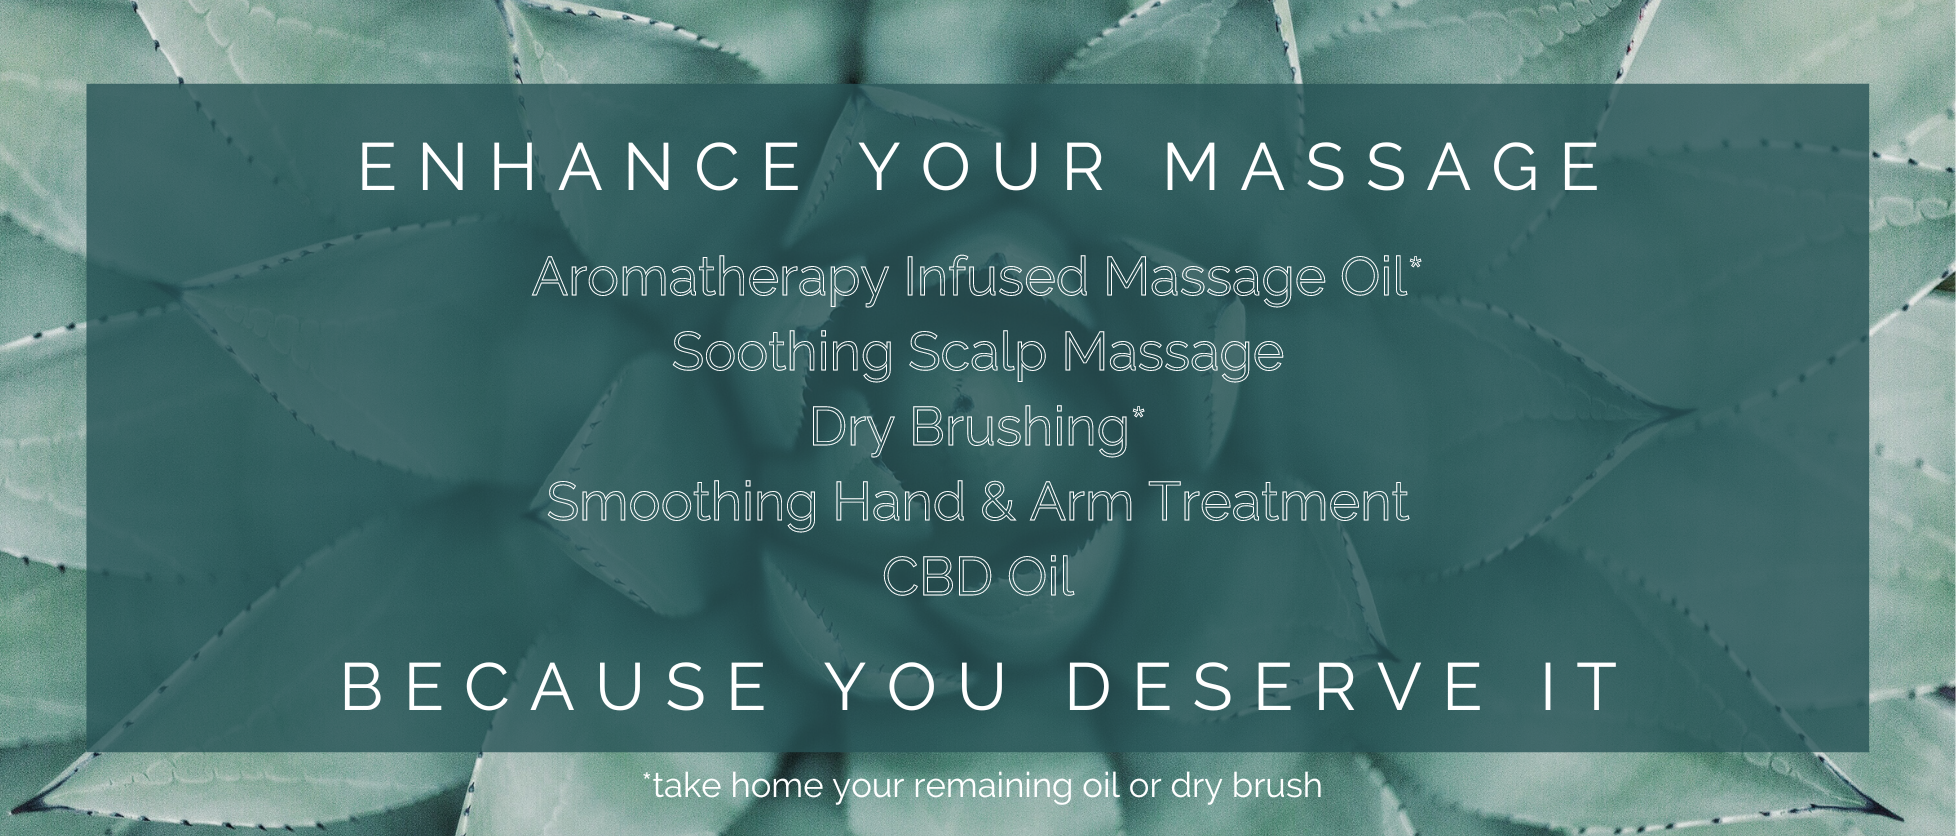 Enhance_your_massage